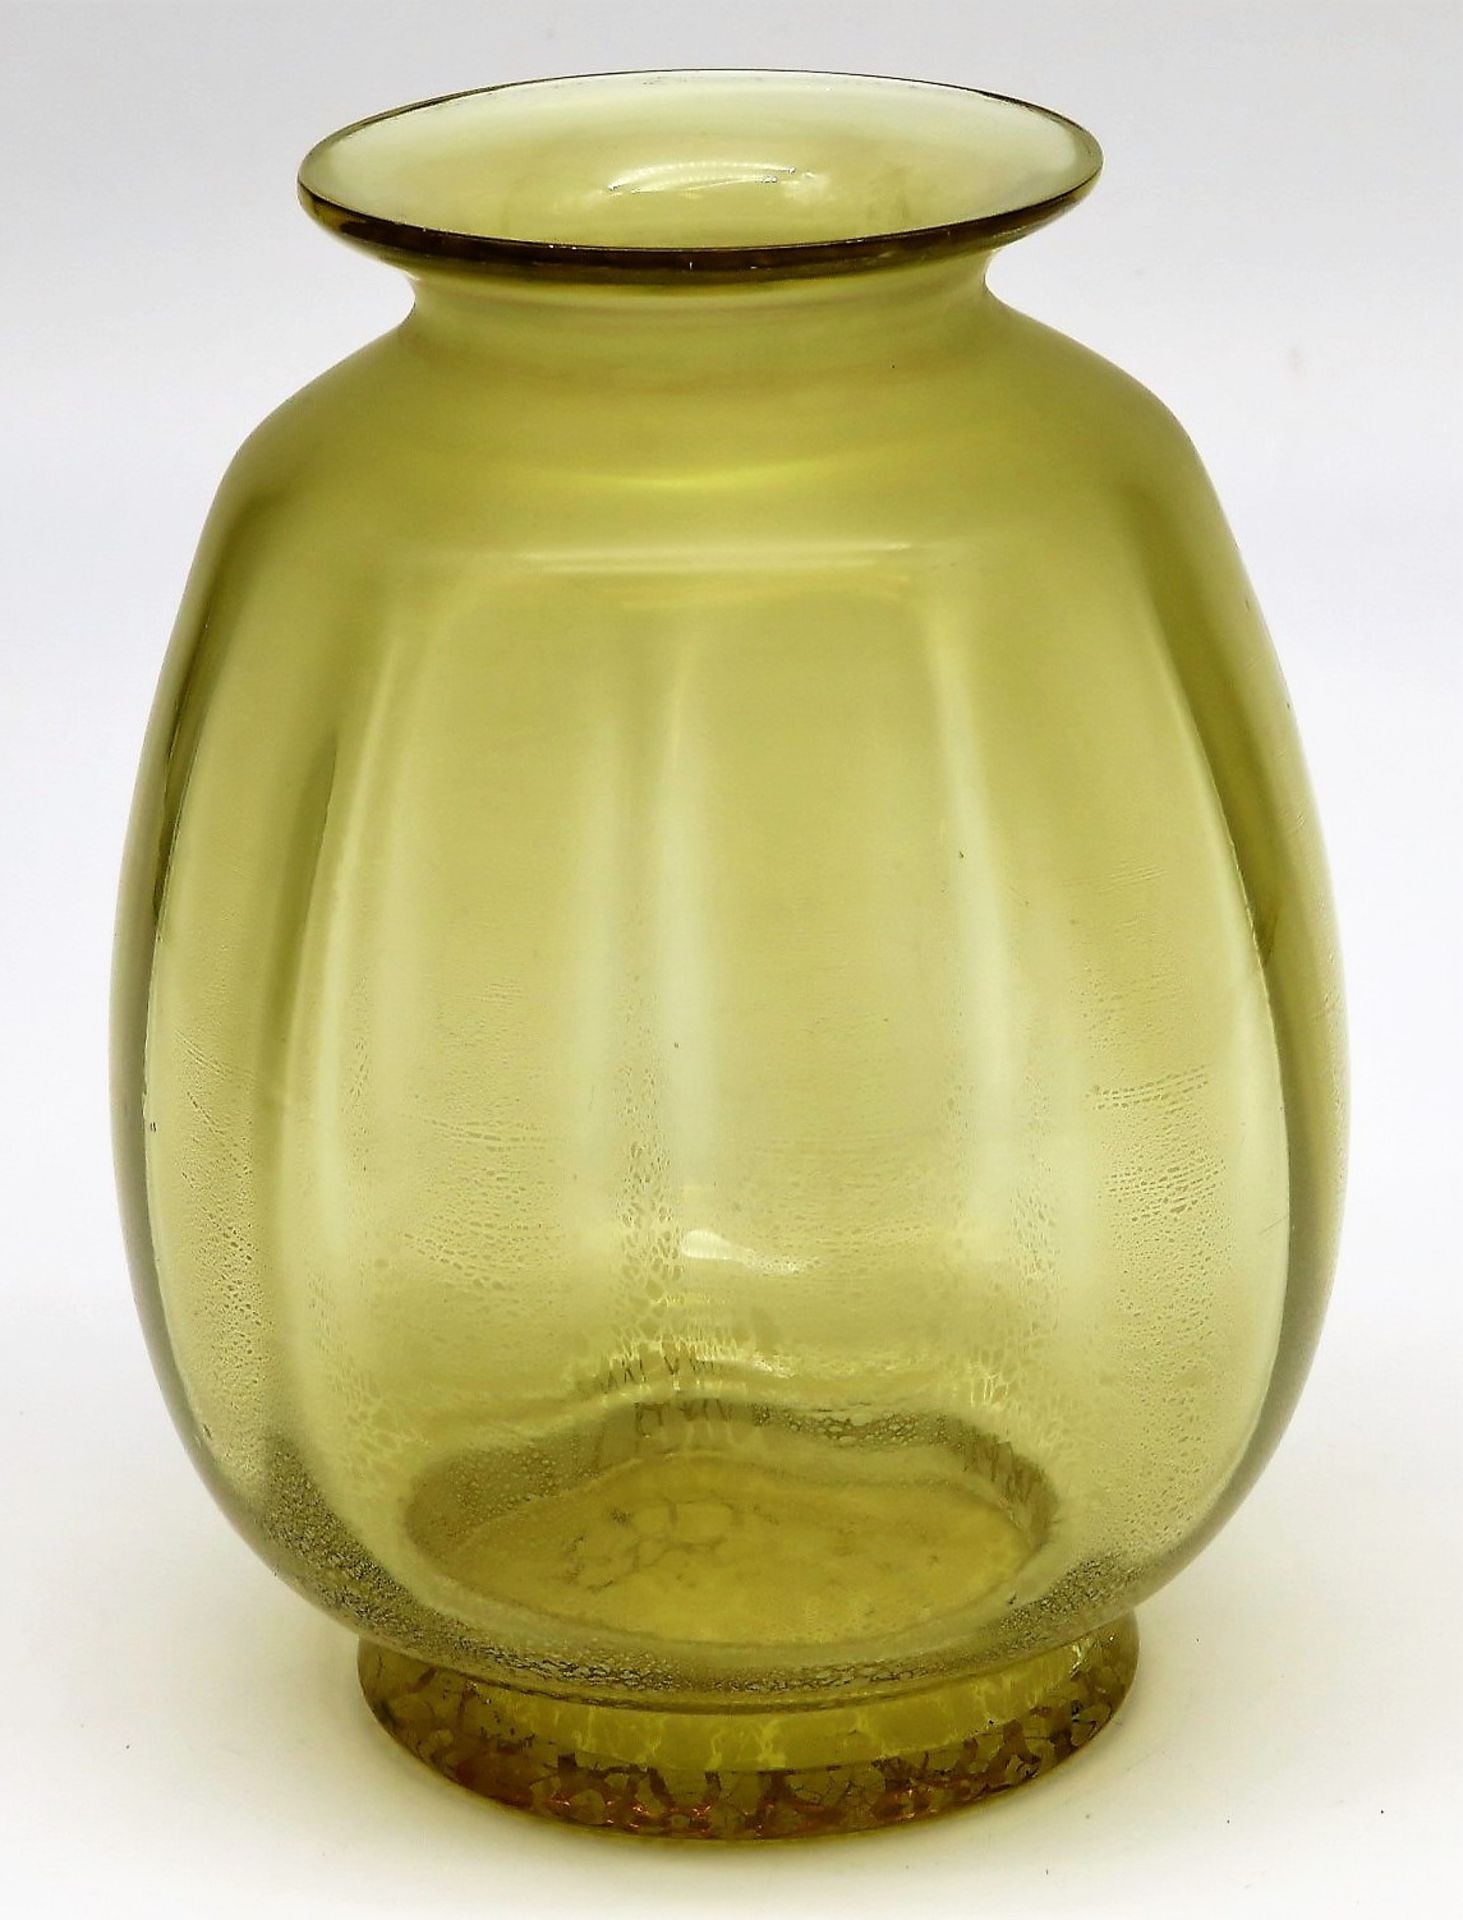 Vase, Niederlande, Leerdam, Jugendstil, um 1900, dickwandiges, bernsteinfarbenes Glas mit Netzdekor